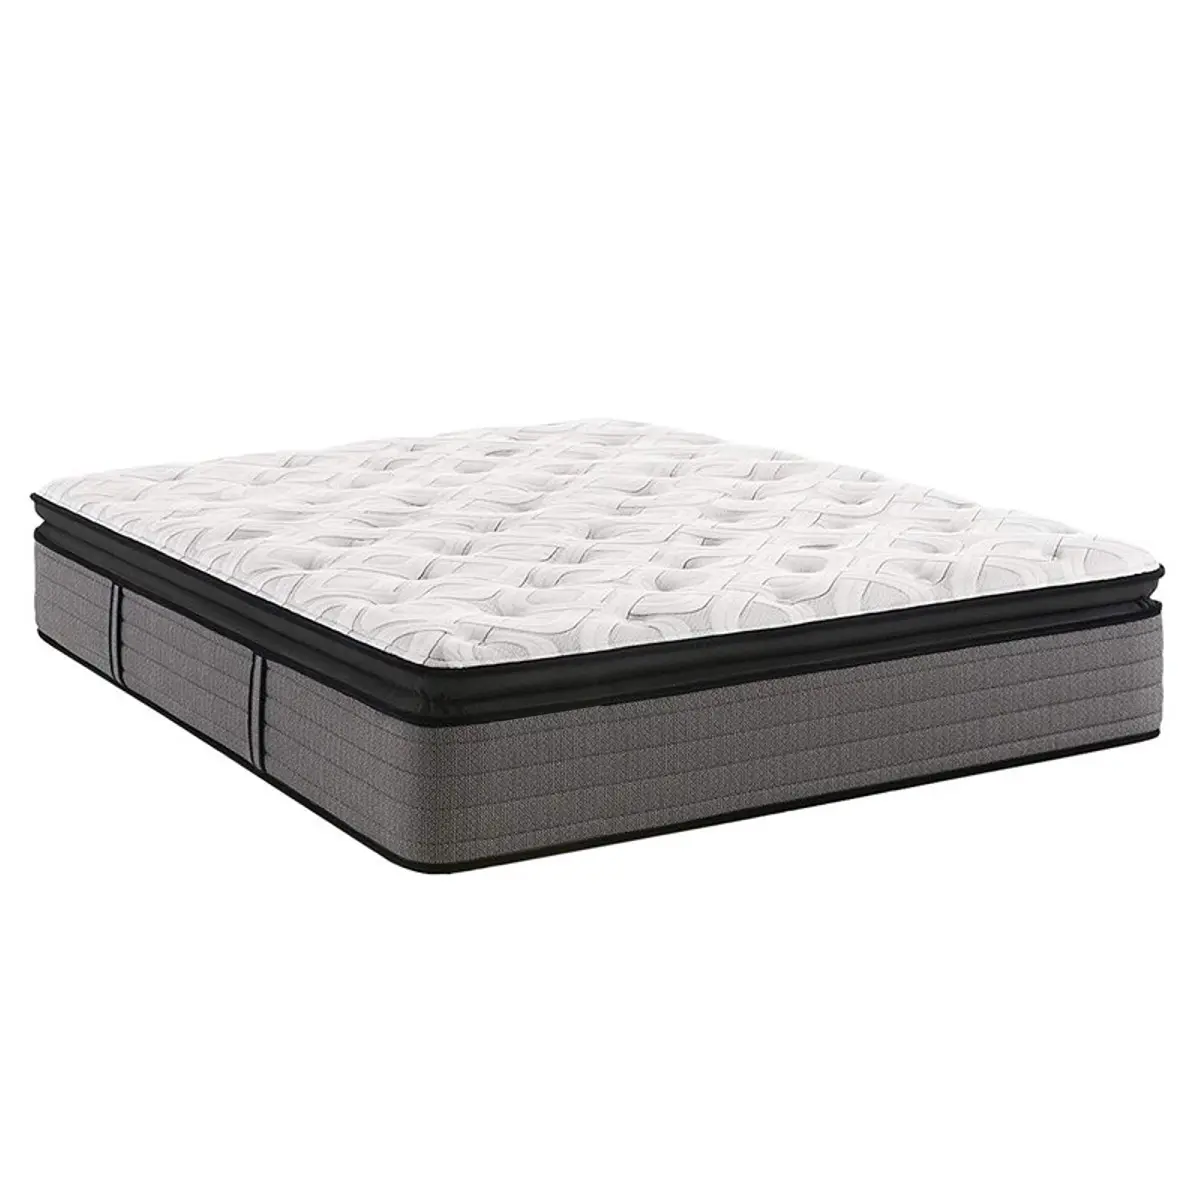 Popular product on comfort elastic five star cheap hotel sleep well memory foam pocket spring mattress